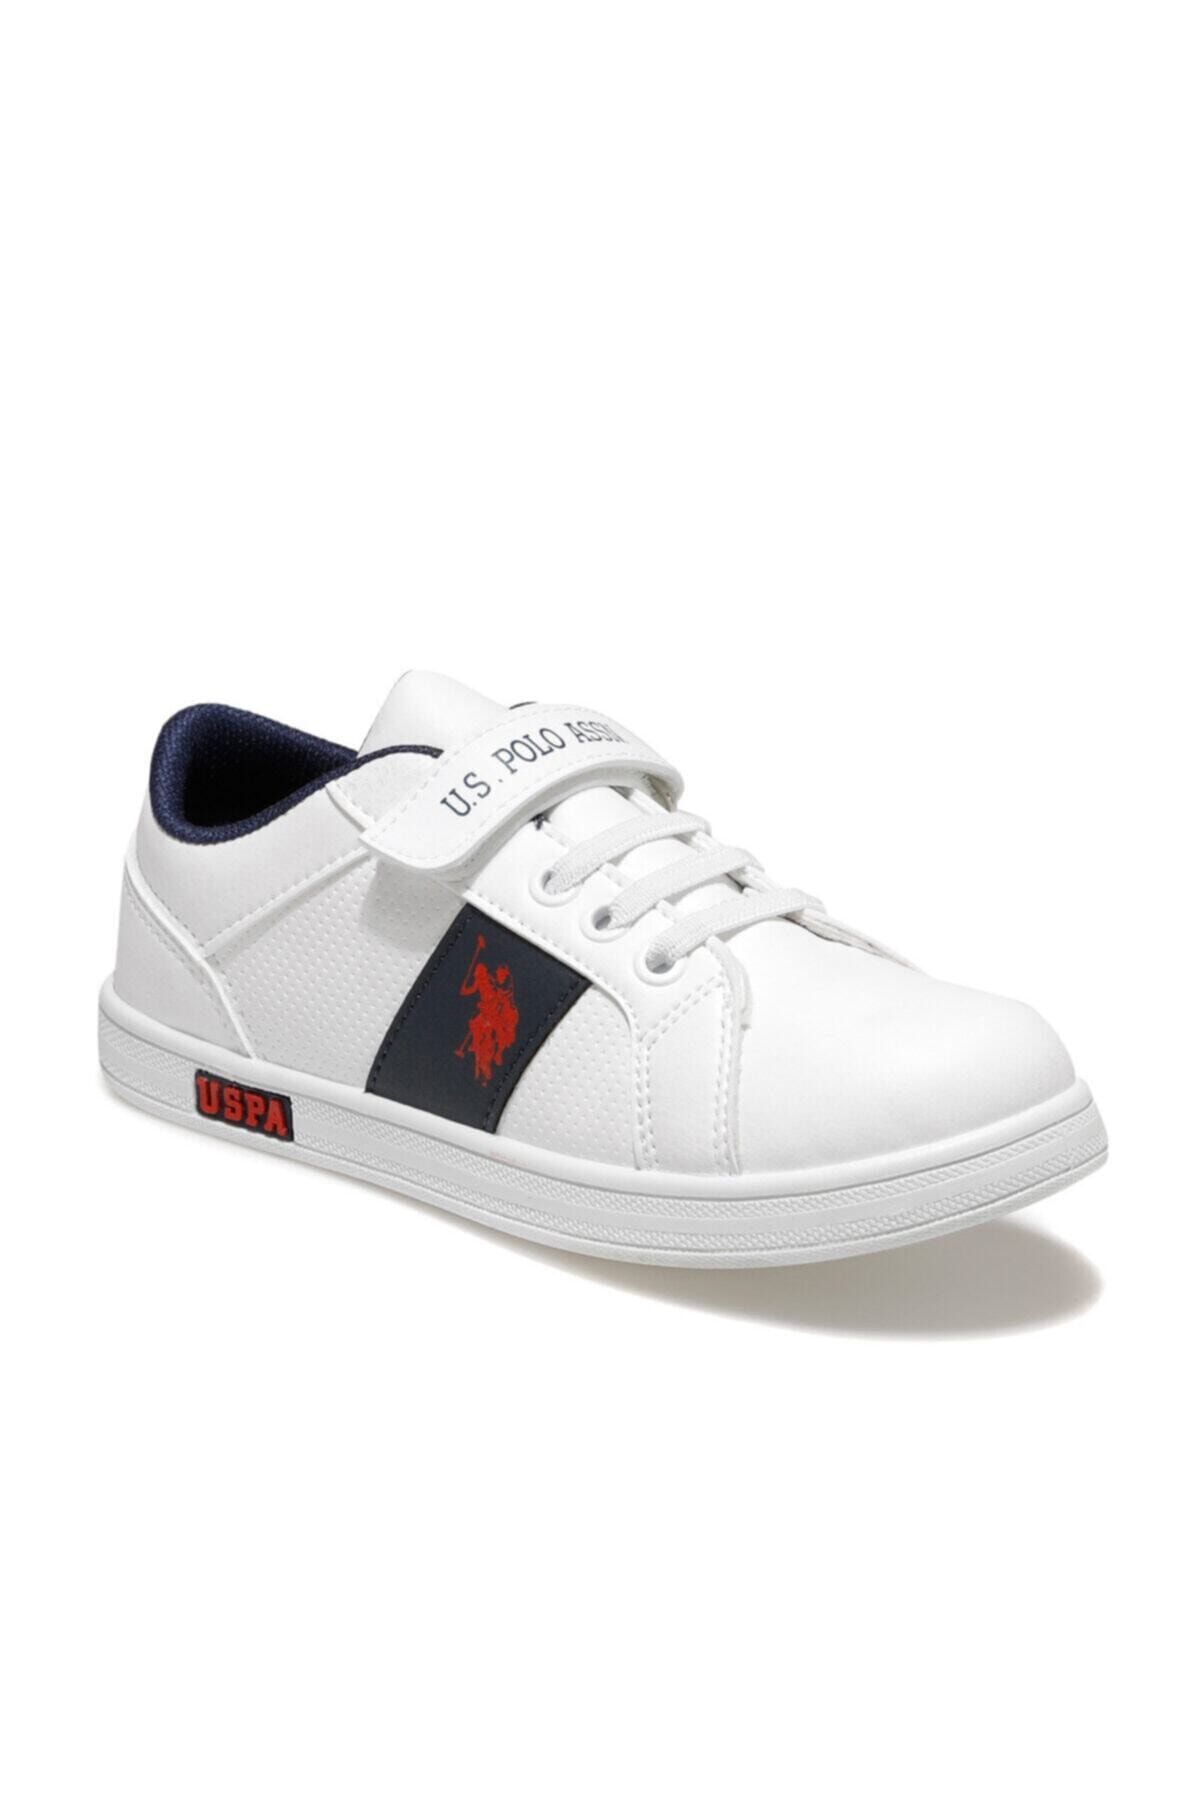 U.S. Polo Assn. CALLO WT Beyaz Erkek Çocuk Sneaker 100551997